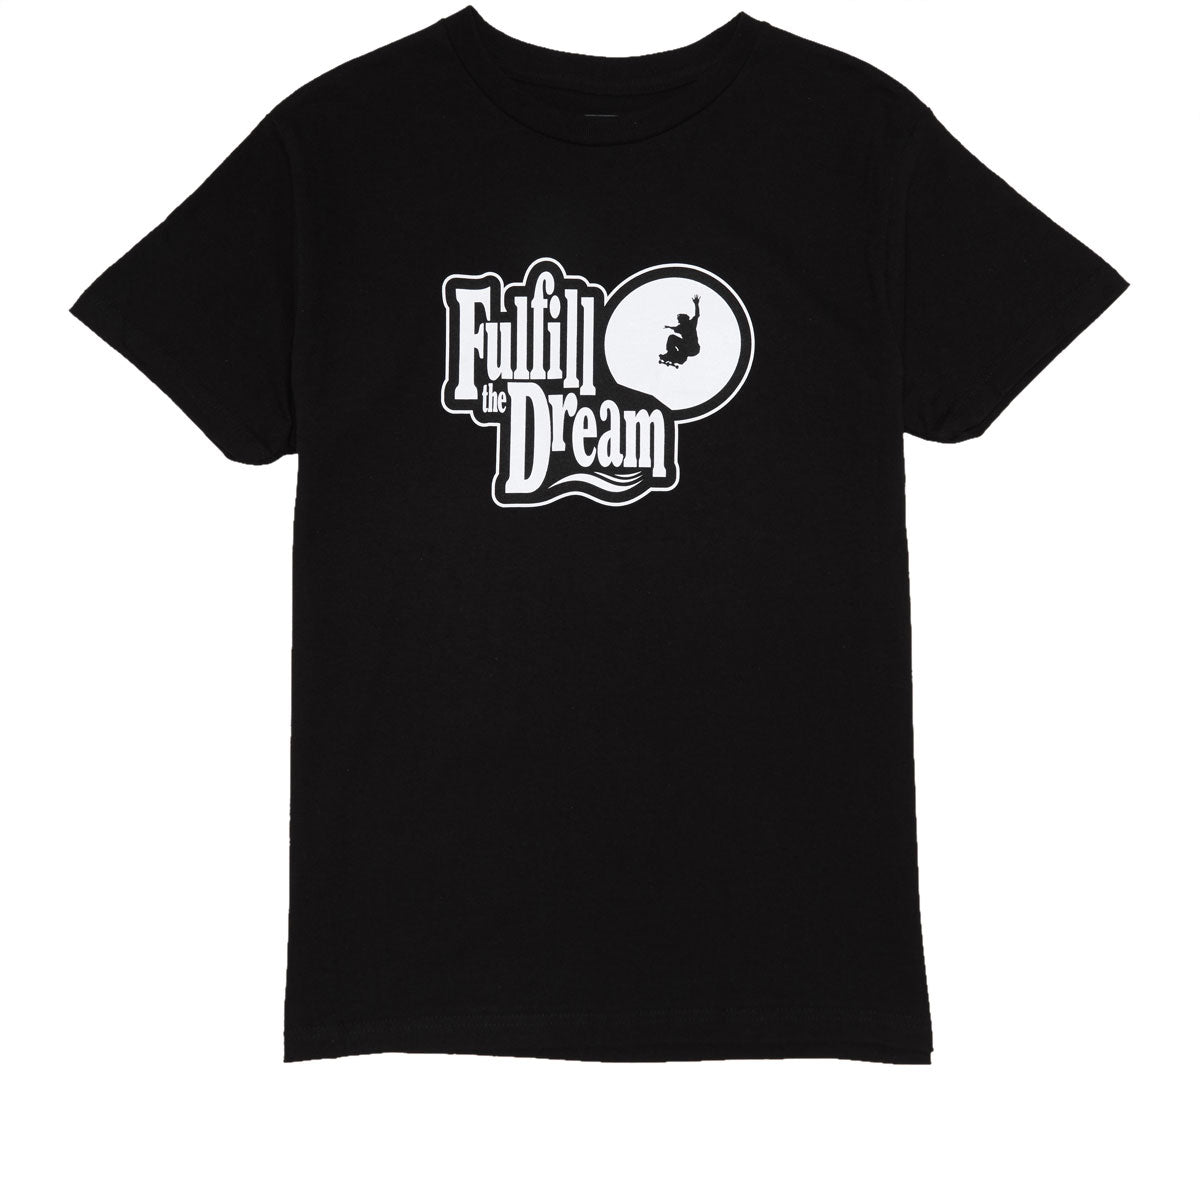 Shorty's Fulfill The Dream T-Shirt - Black image 1